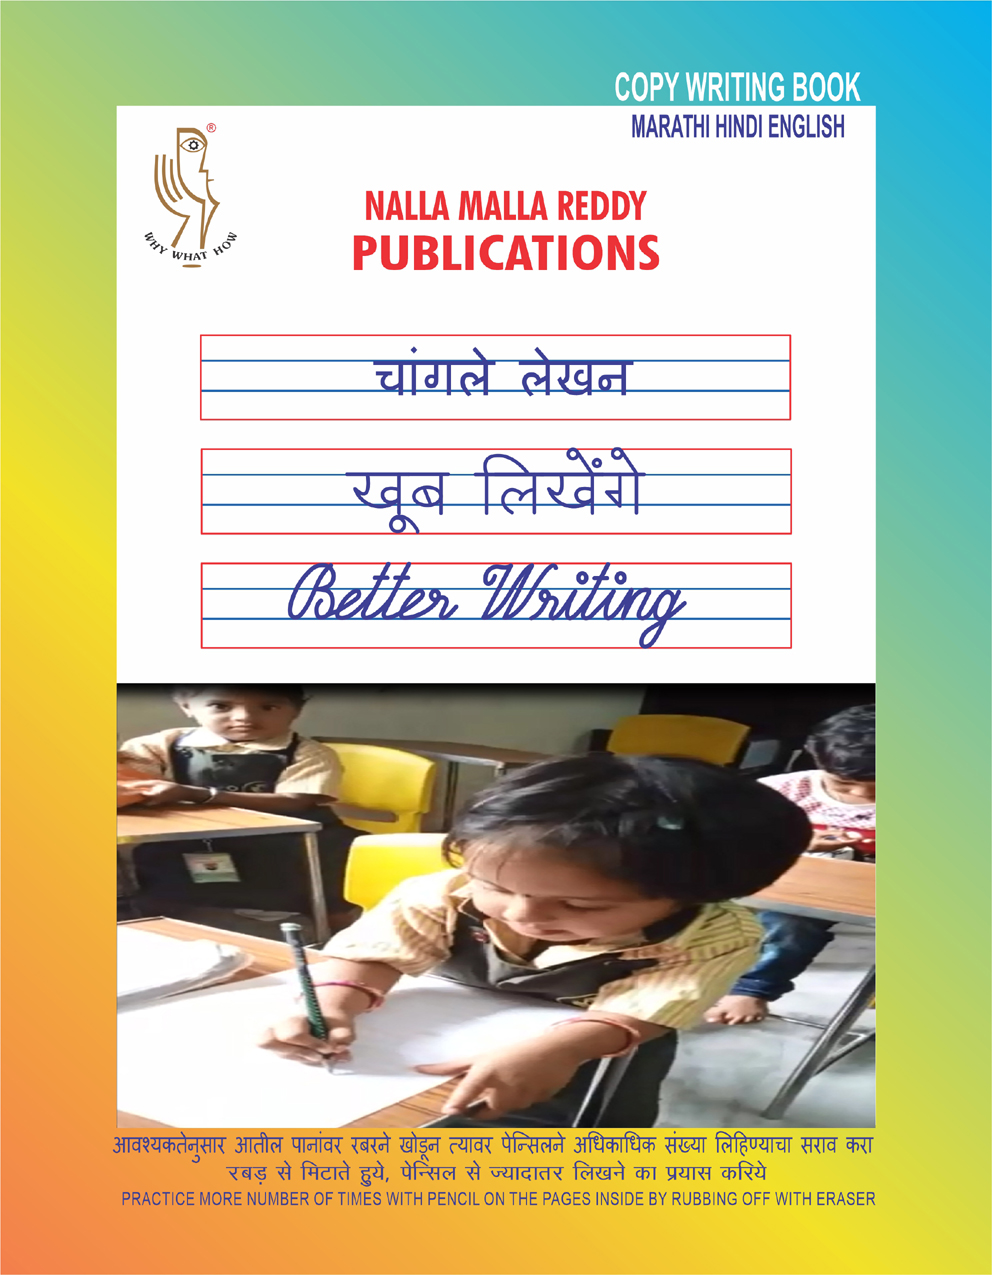 Marathi 3 in 1 copy writing book Tittle website